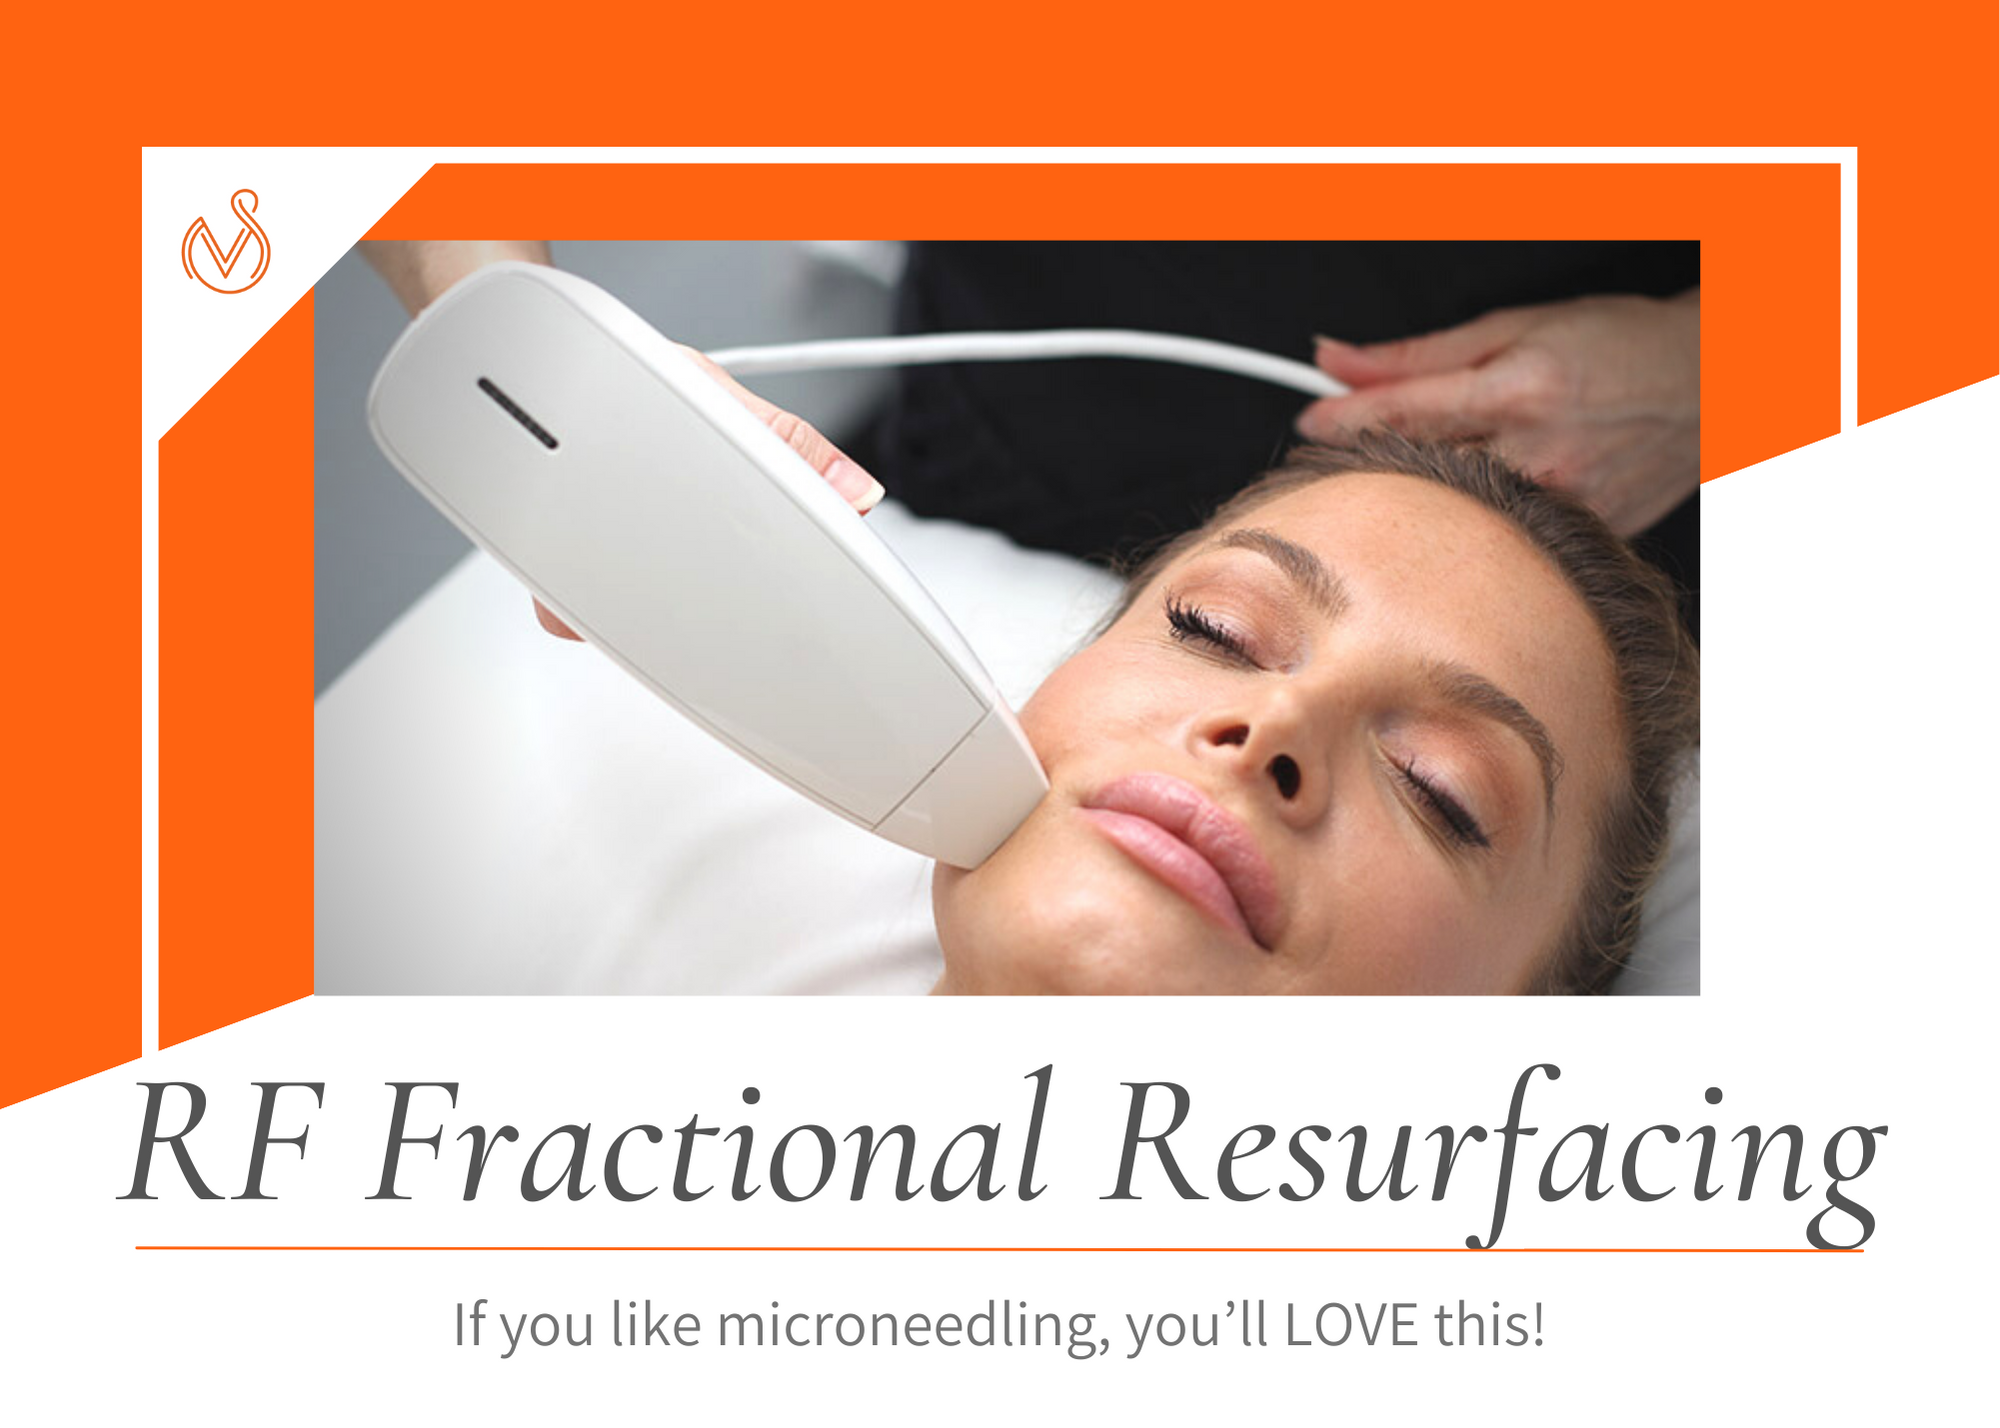 If You Like Microneedling, You’ll Love RF Fractional Resurfacing